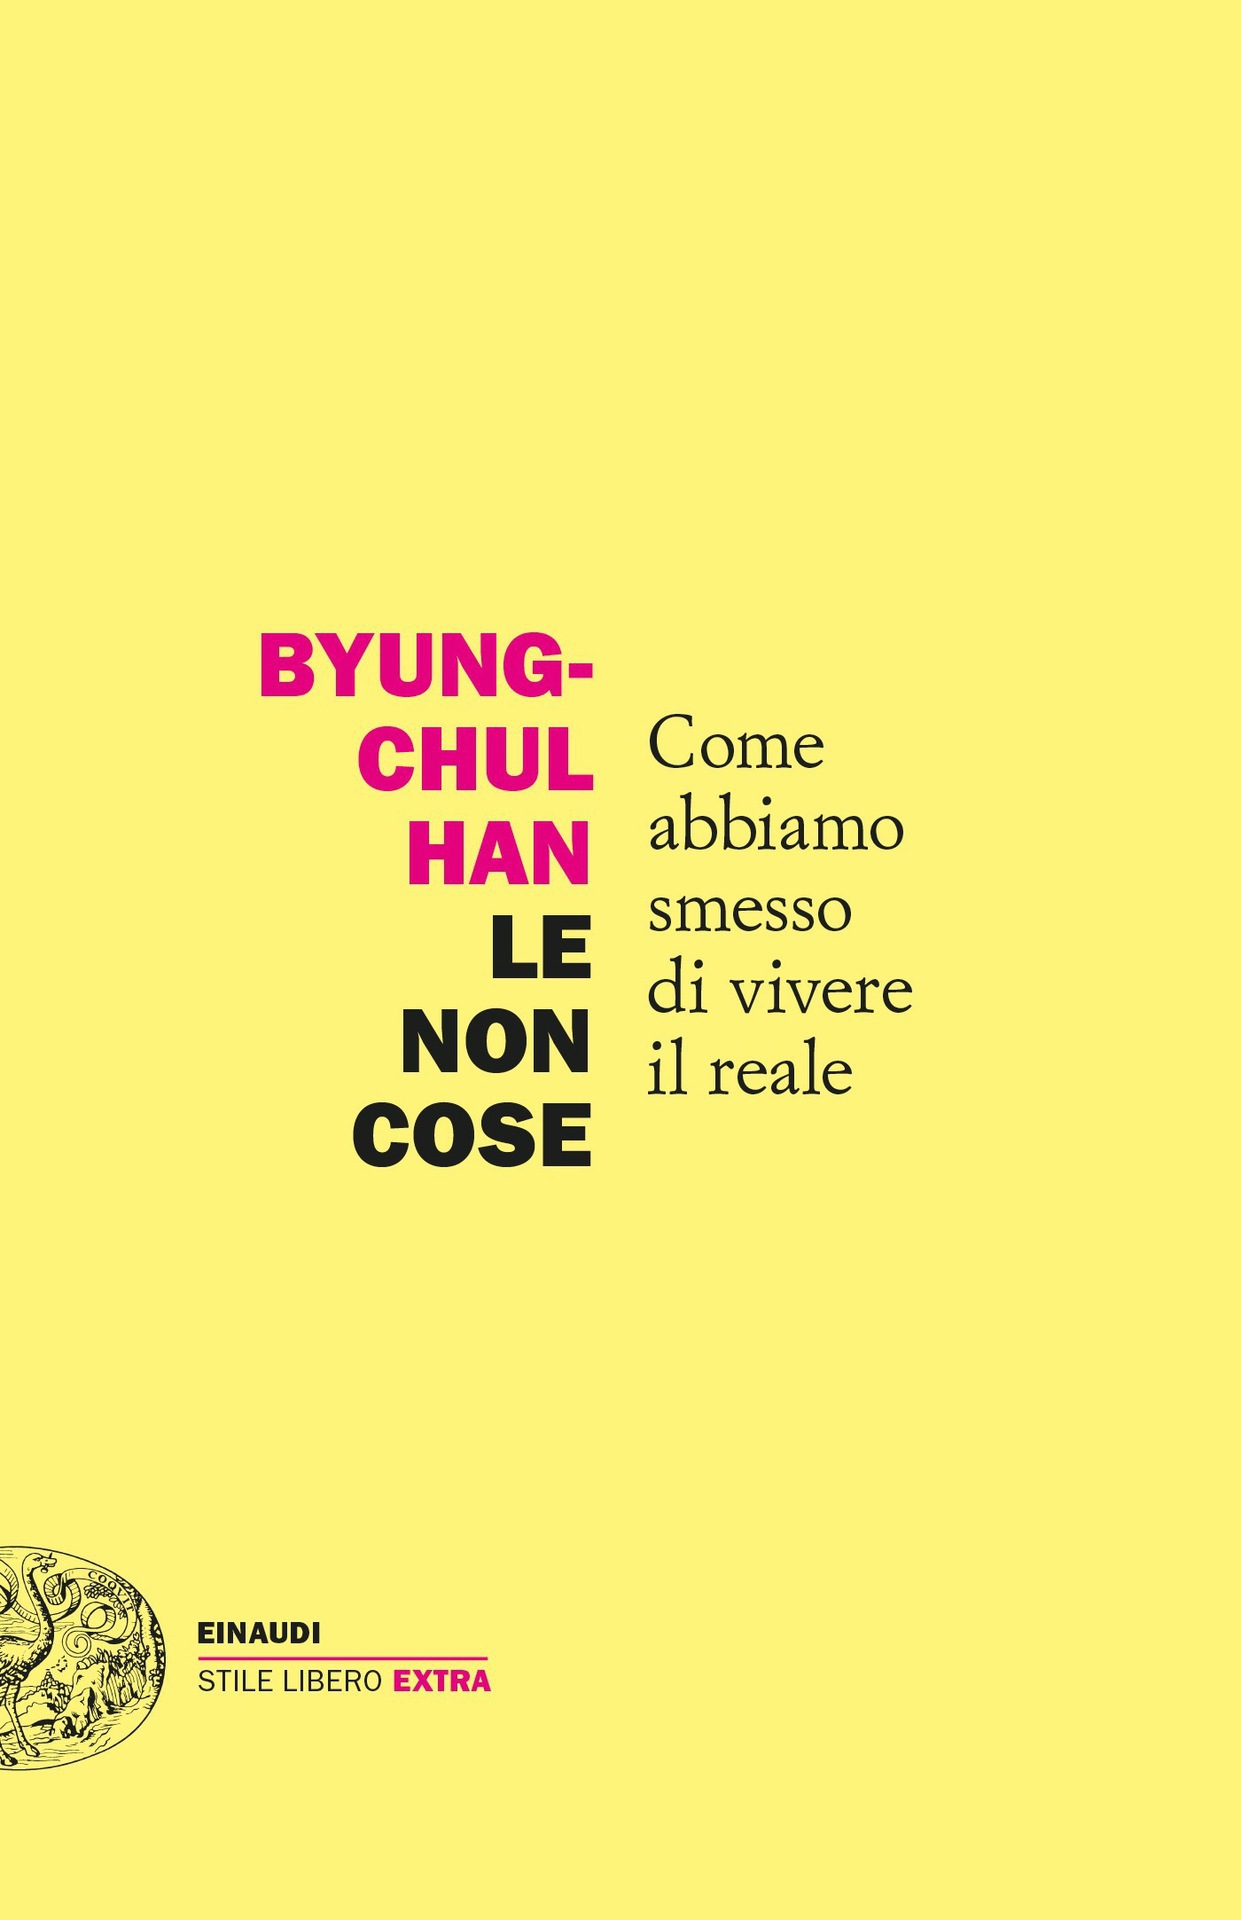 Byung-Chul Han: Le non cose (Italiano language, Einaudi)